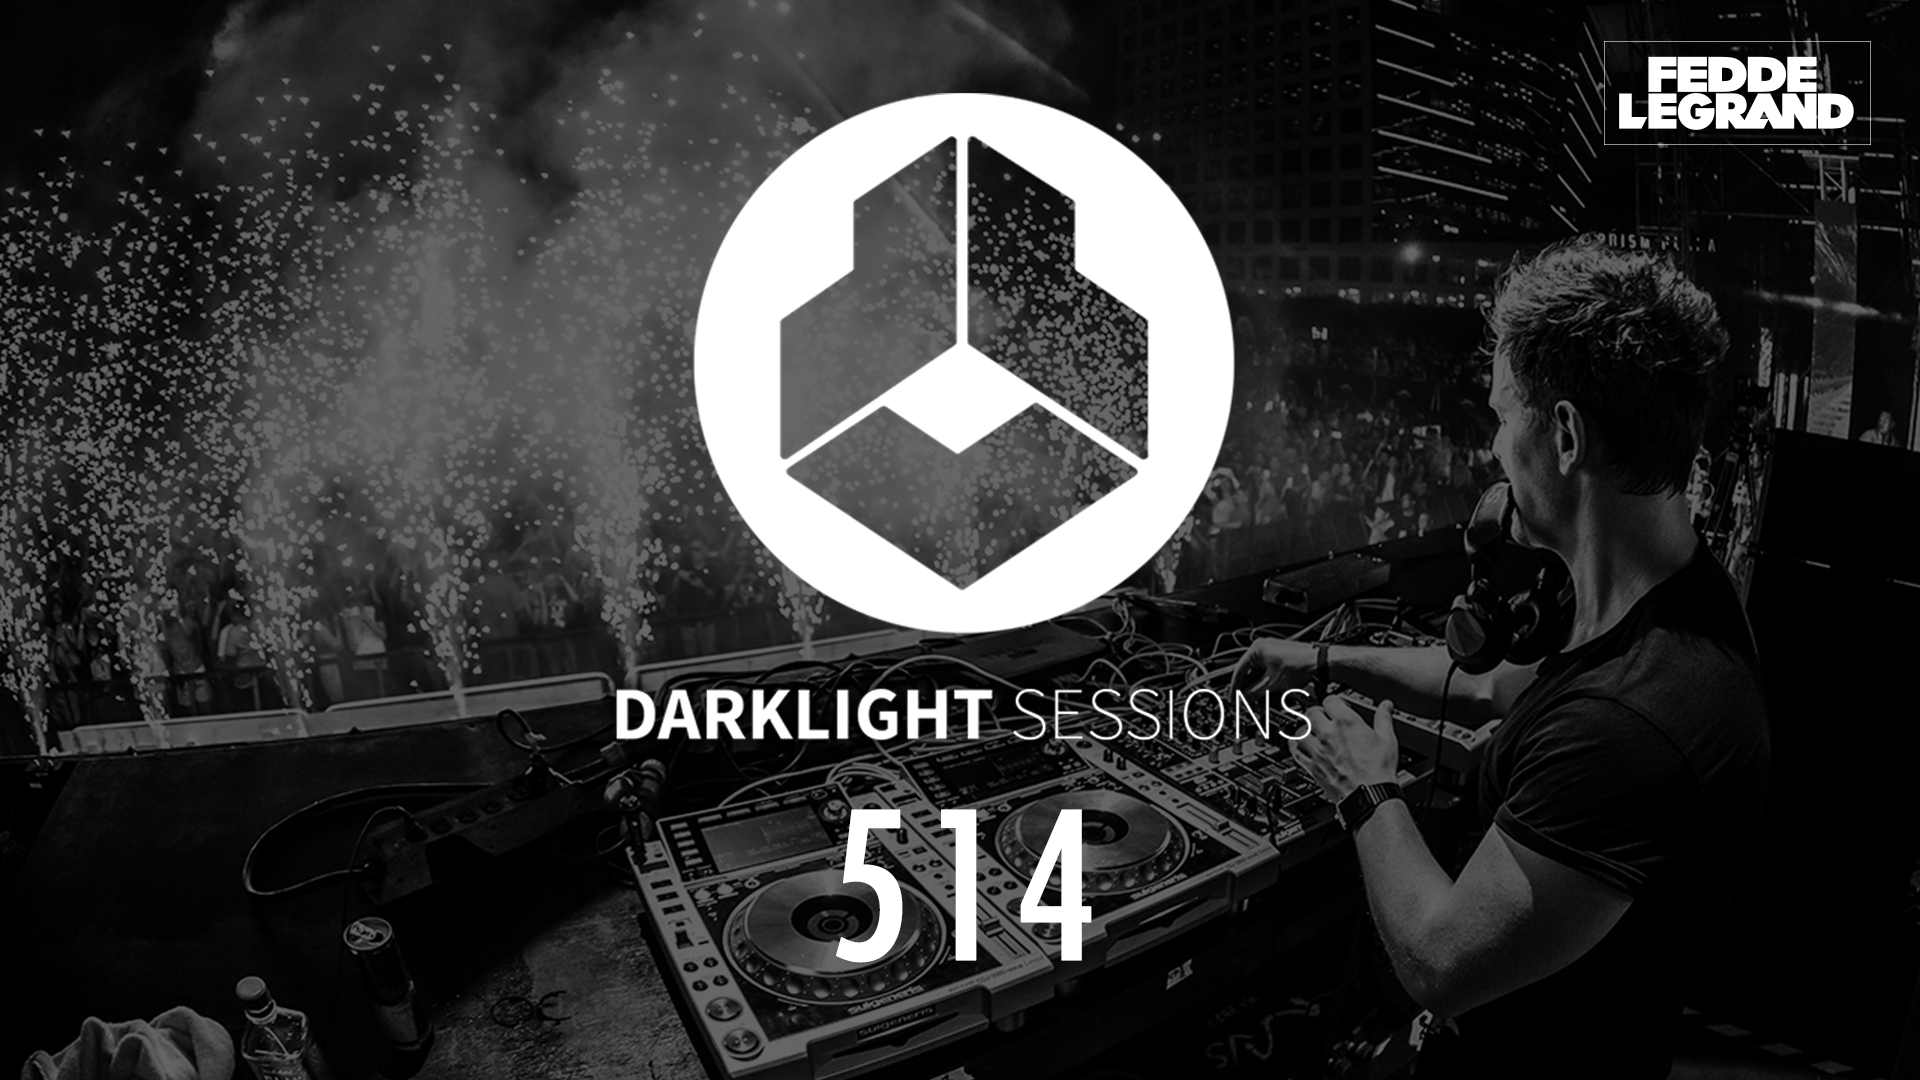 Darklight Sessions 514